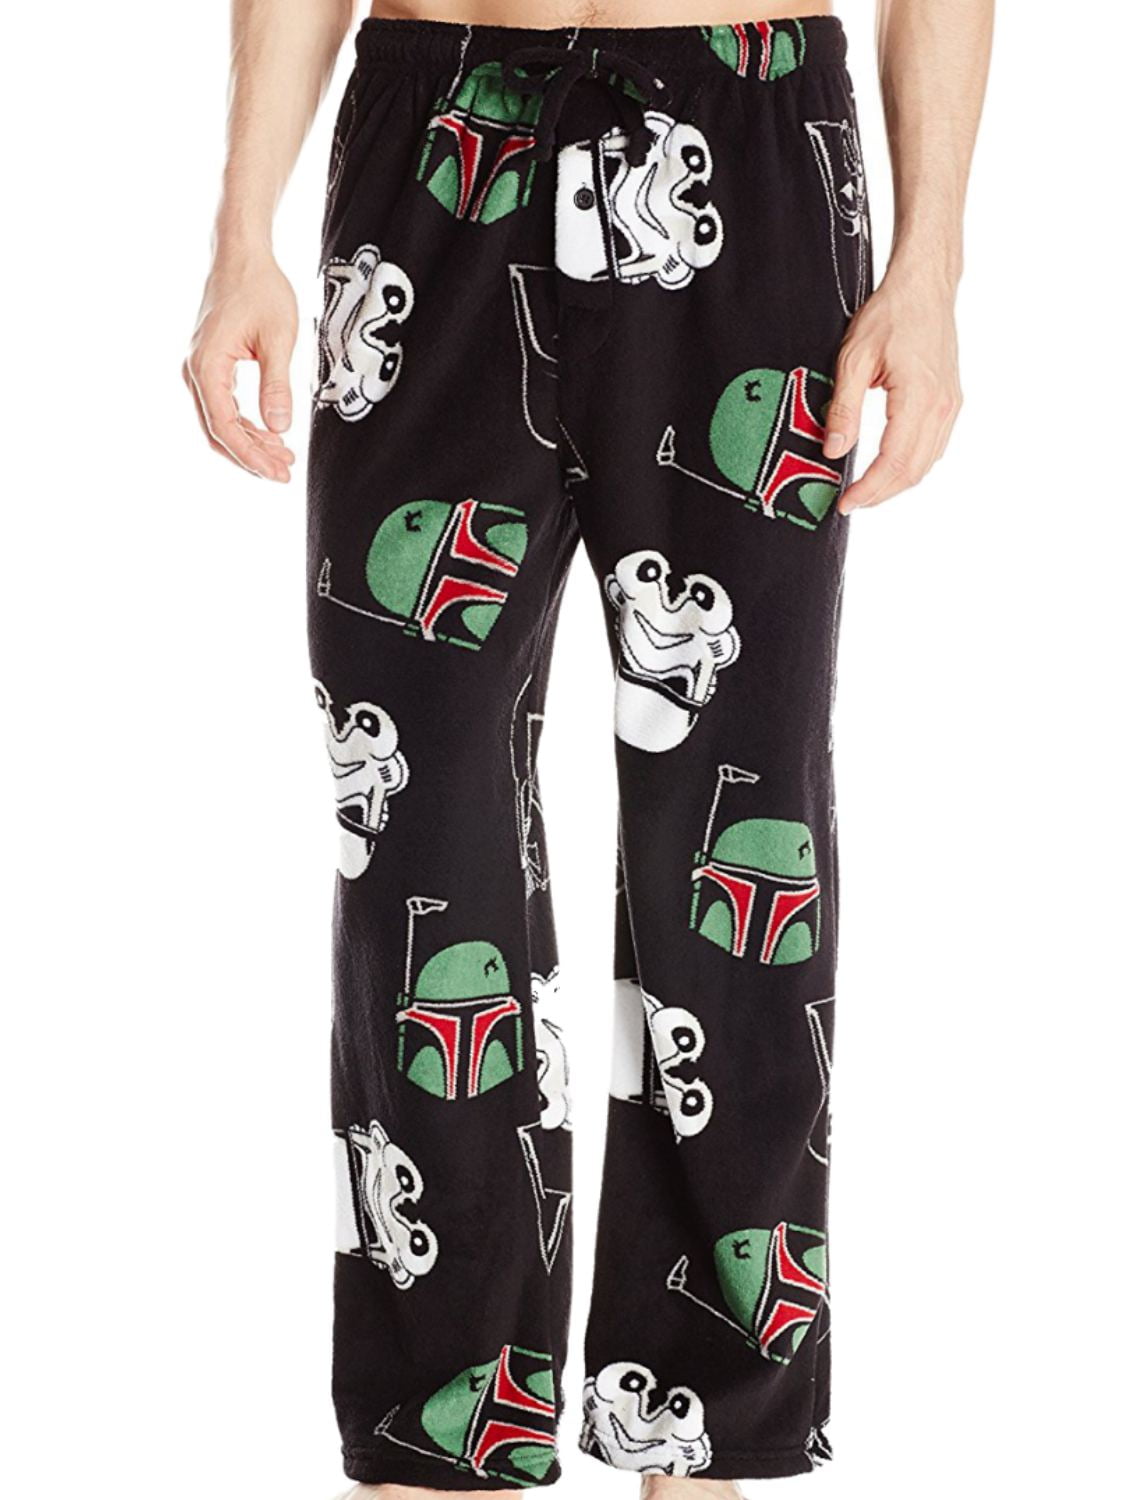 Star Wars Lounge Pajamas Pants Black Stormtrooper Mens Christmas Size Medium